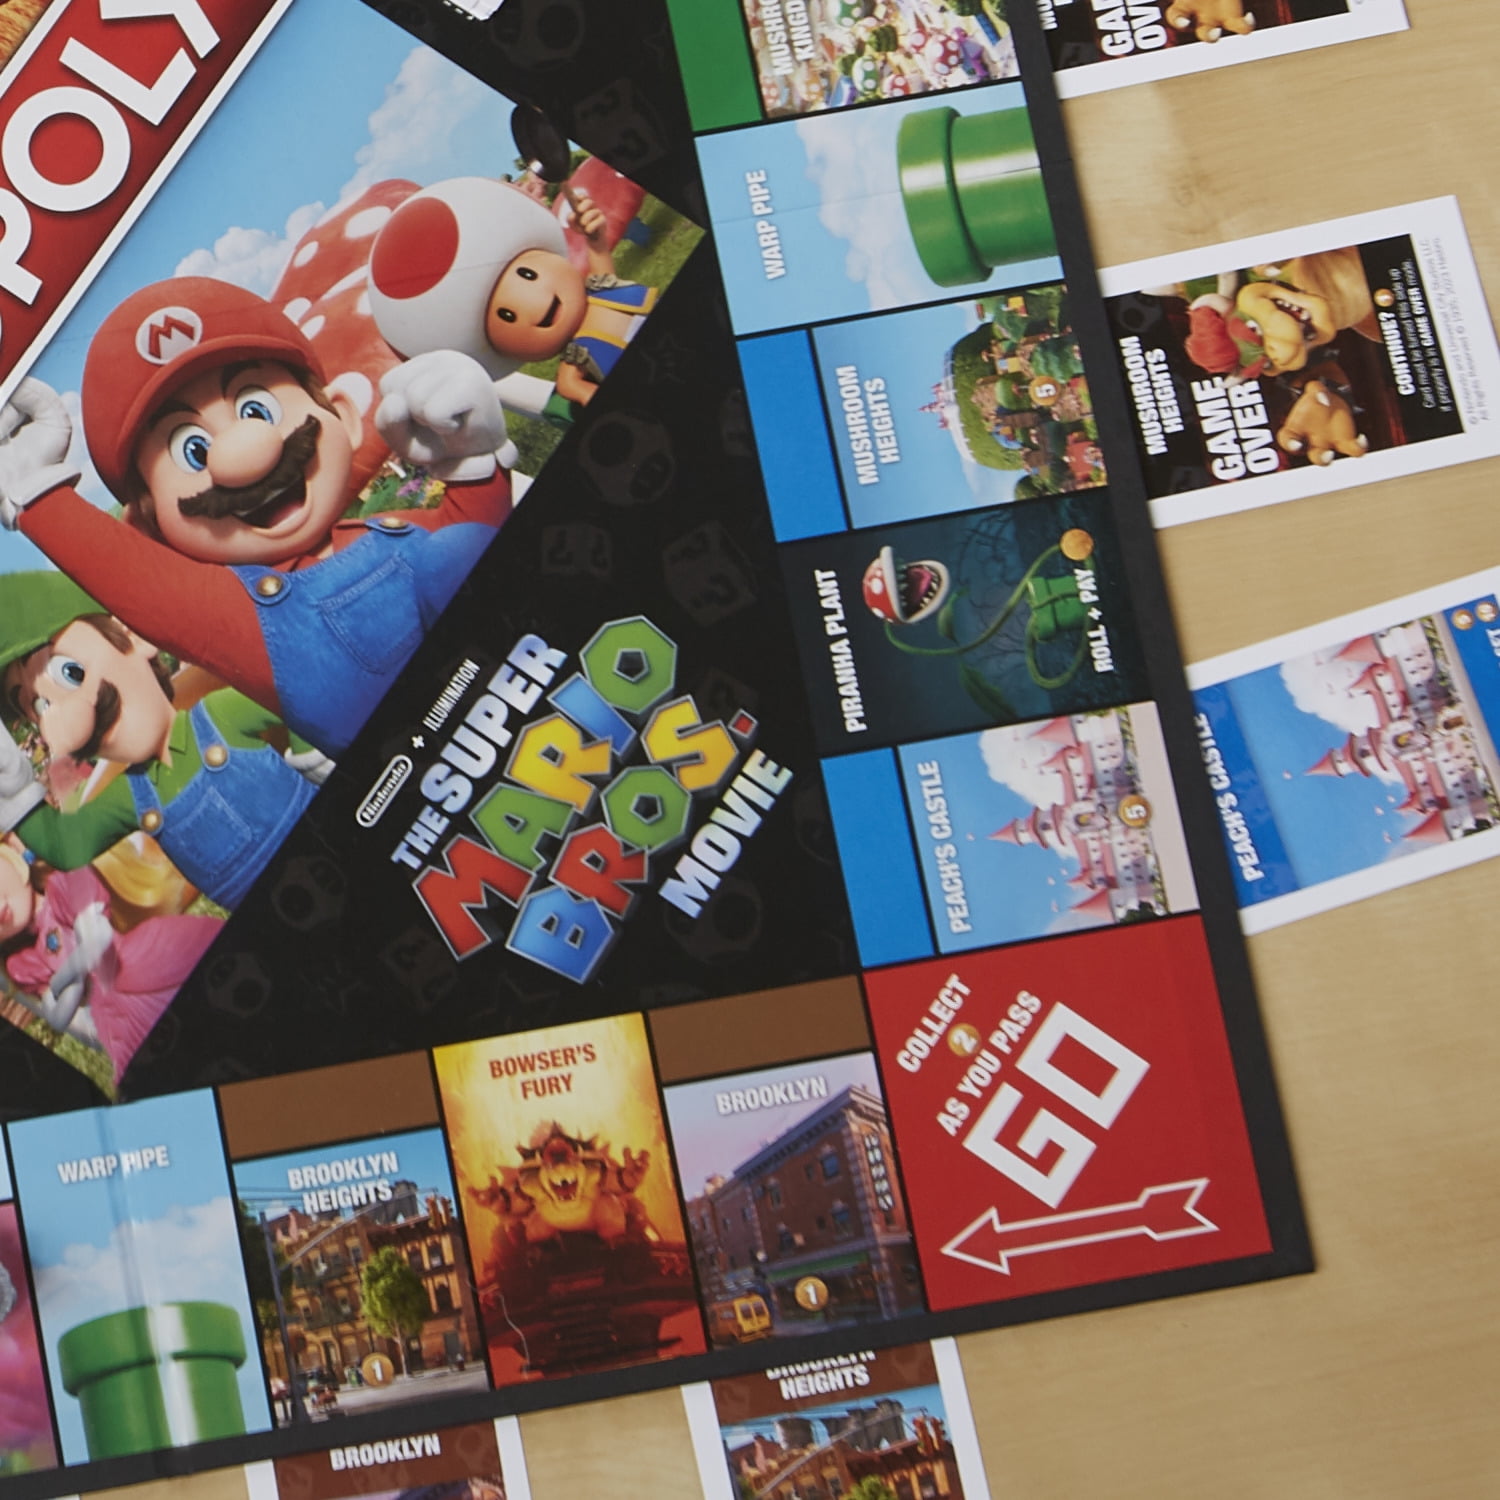 Monopoly Super Mario O Filme Hasbro F6818 - Juguetilandia